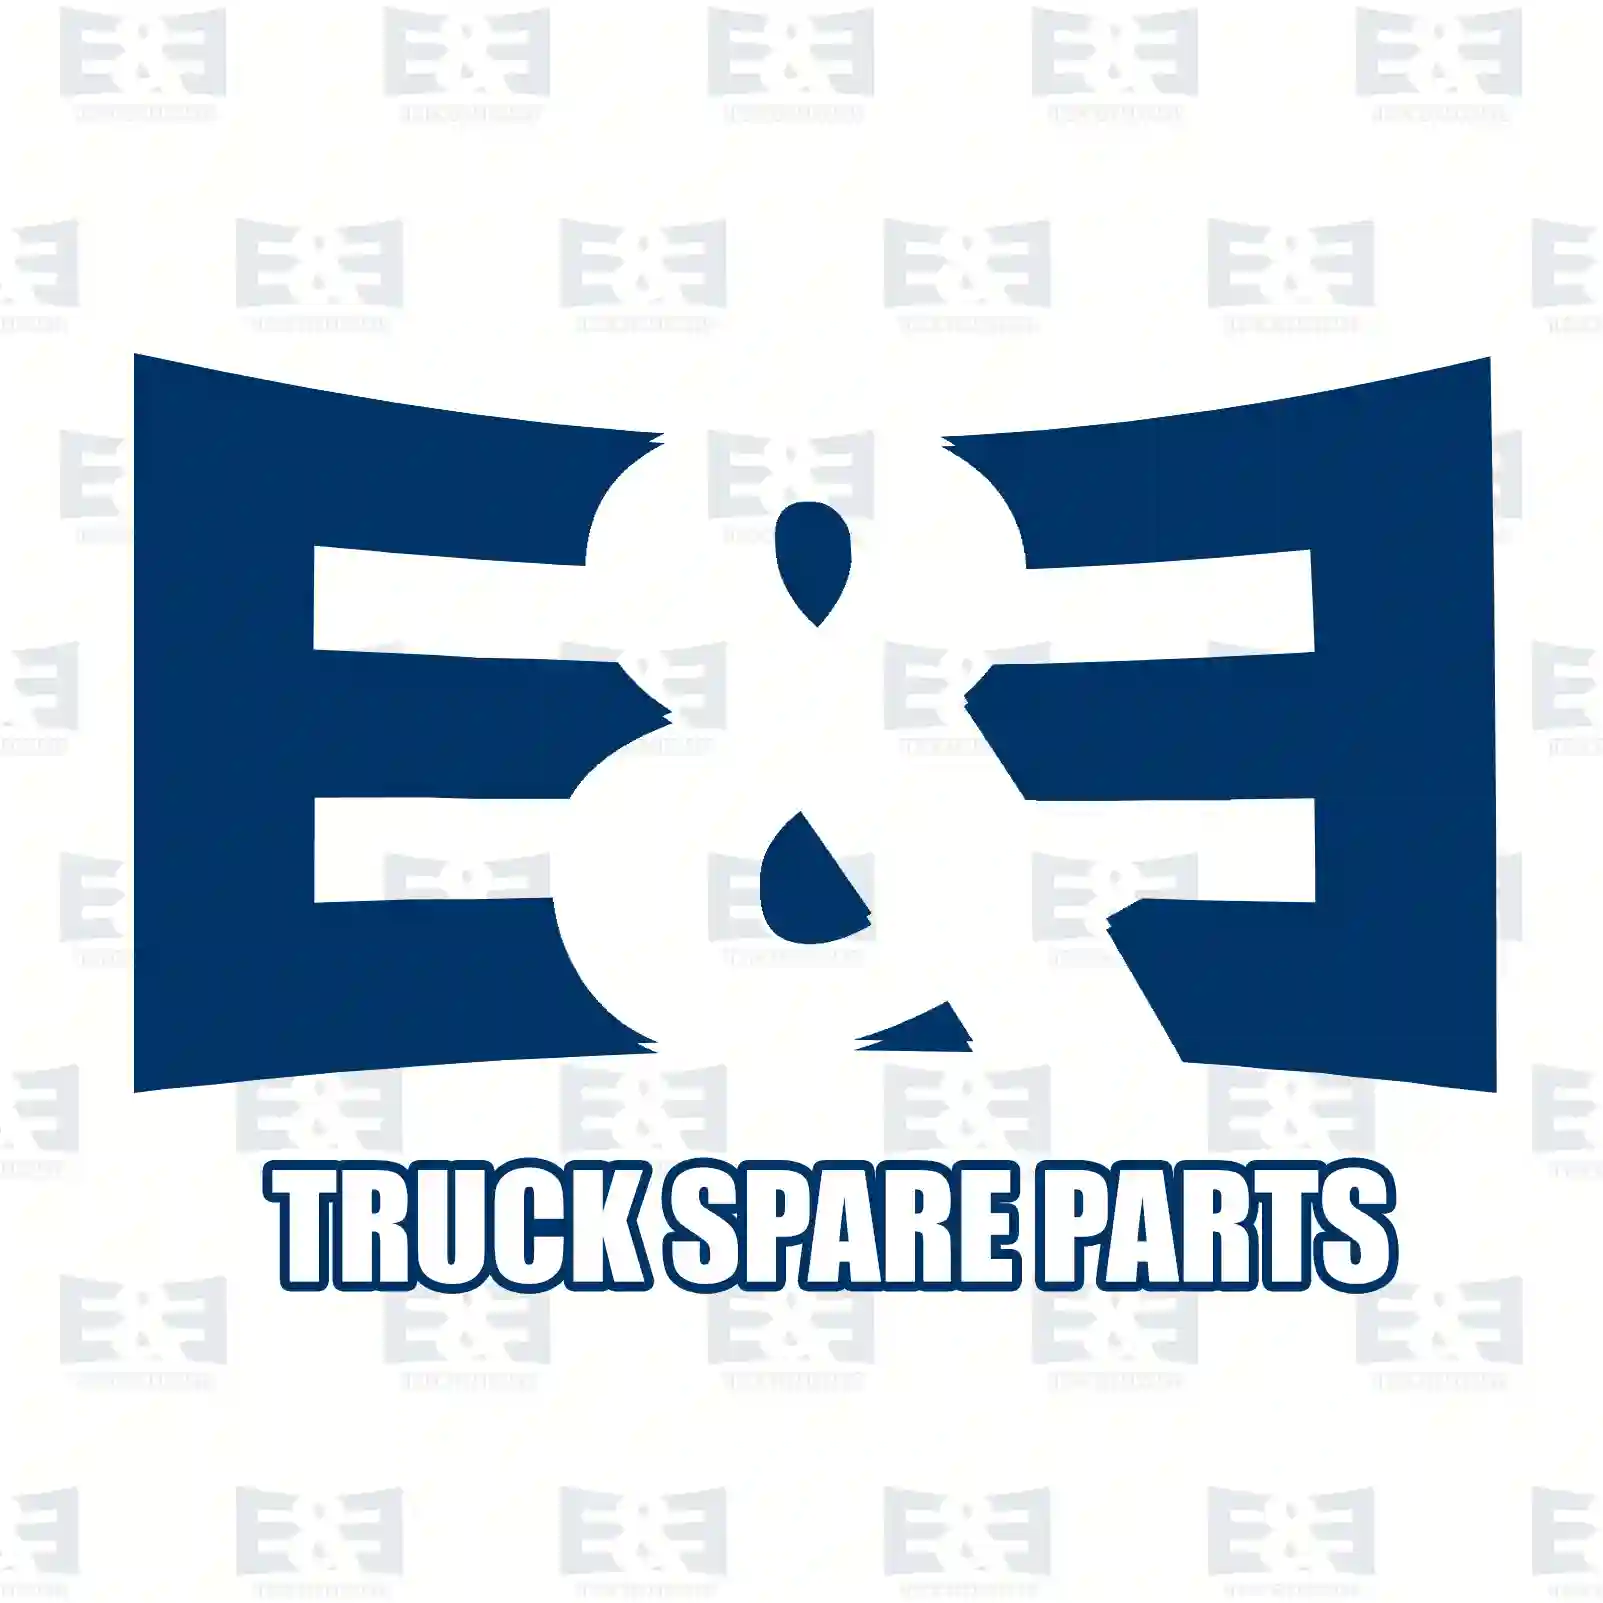 Turn signal lamp, rear, 2E2290701, 700040093210, 7000493210, N1011025195, 005603037, 011025195, 011025196, 088007840, 150304300, 150324200, 474408, 7036512, 70365120, ZG21206-0008 ||  2E2290701 E&E Truck Spare Parts | Truck Spare Parts, Auotomotive Spare Parts Turn signal lamp, rear, 2E2290701, 700040093210, 7000493210, N1011025195, 005603037, 011025195, 011025196, 088007840, 150304300, 150324200, 474408, 7036512, 70365120, ZG21206-0008 ||  2E2290701 E&E Truck Spare Parts | Truck Spare Parts, Auotomotive Spare Parts